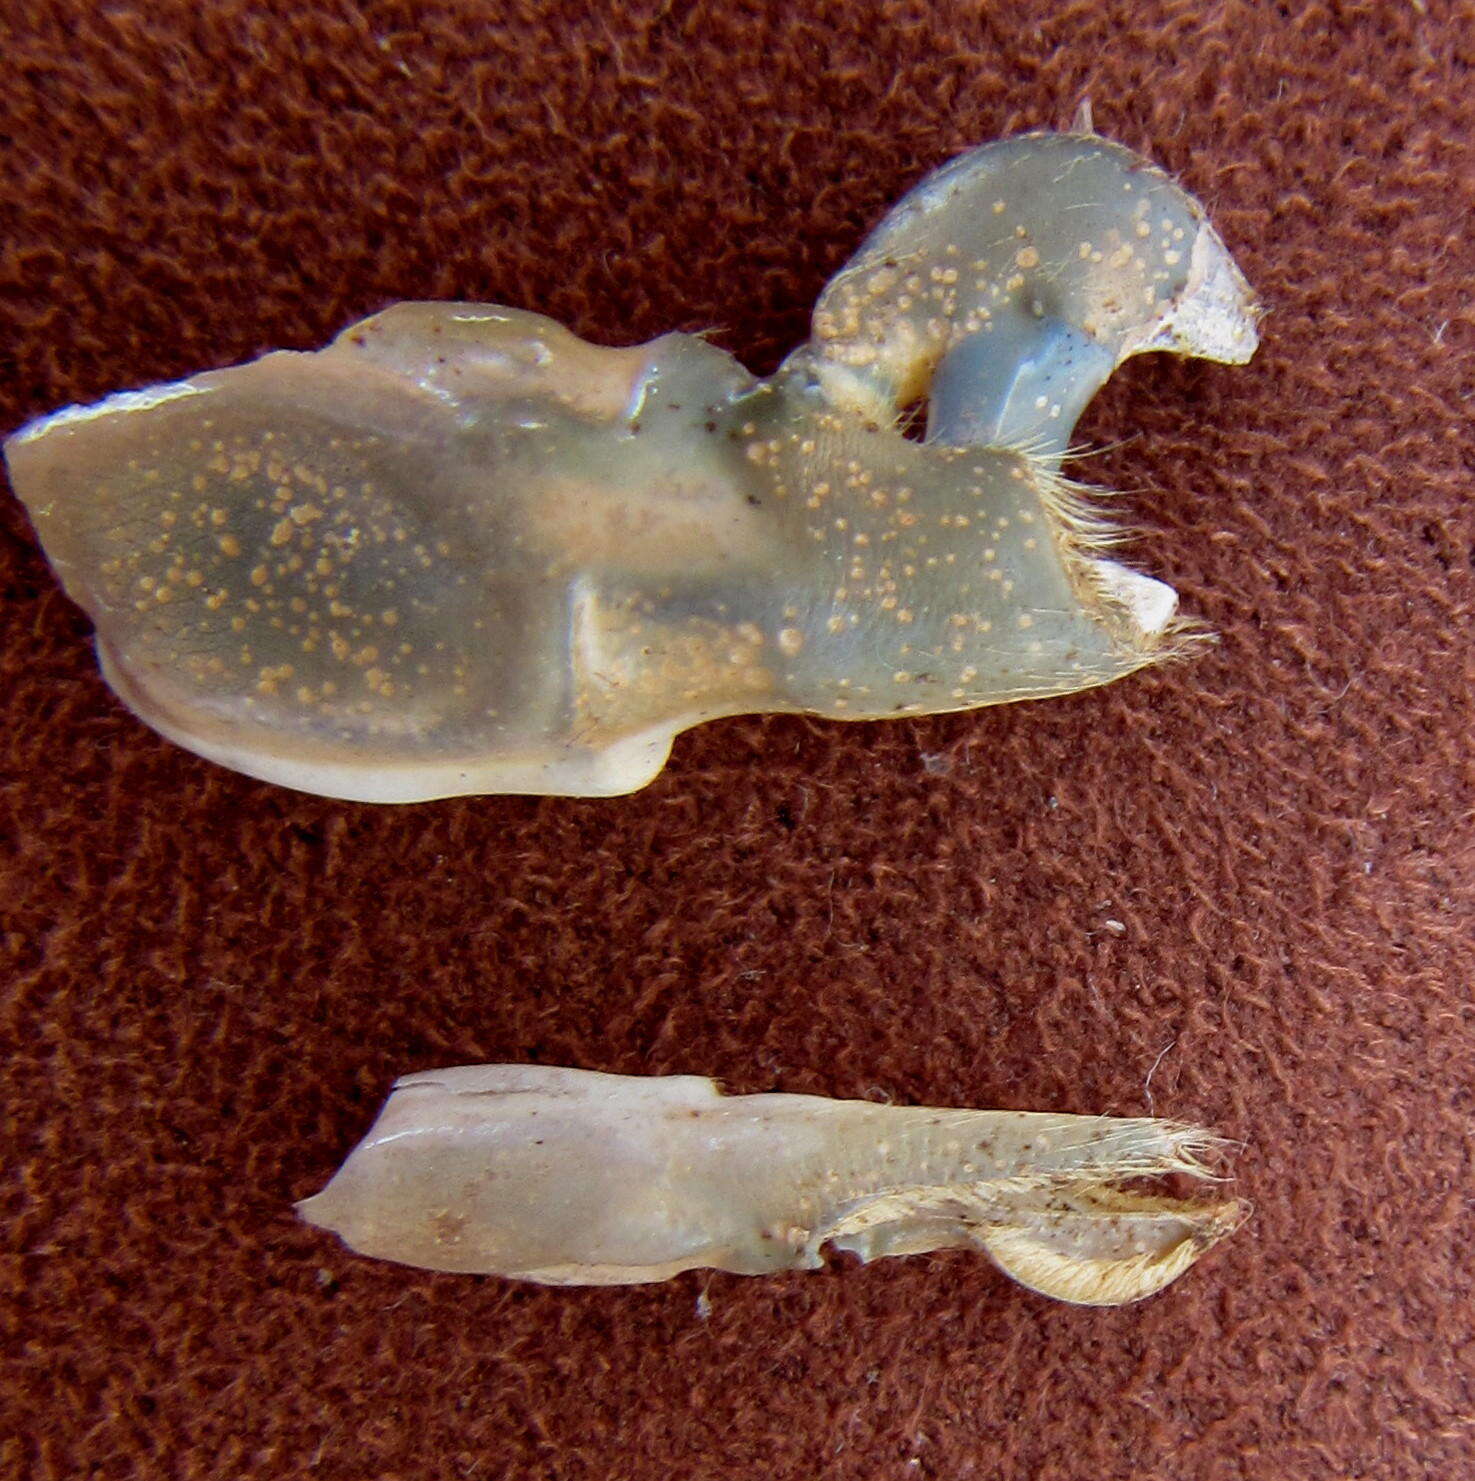 Image of brownbar snapping shrimp